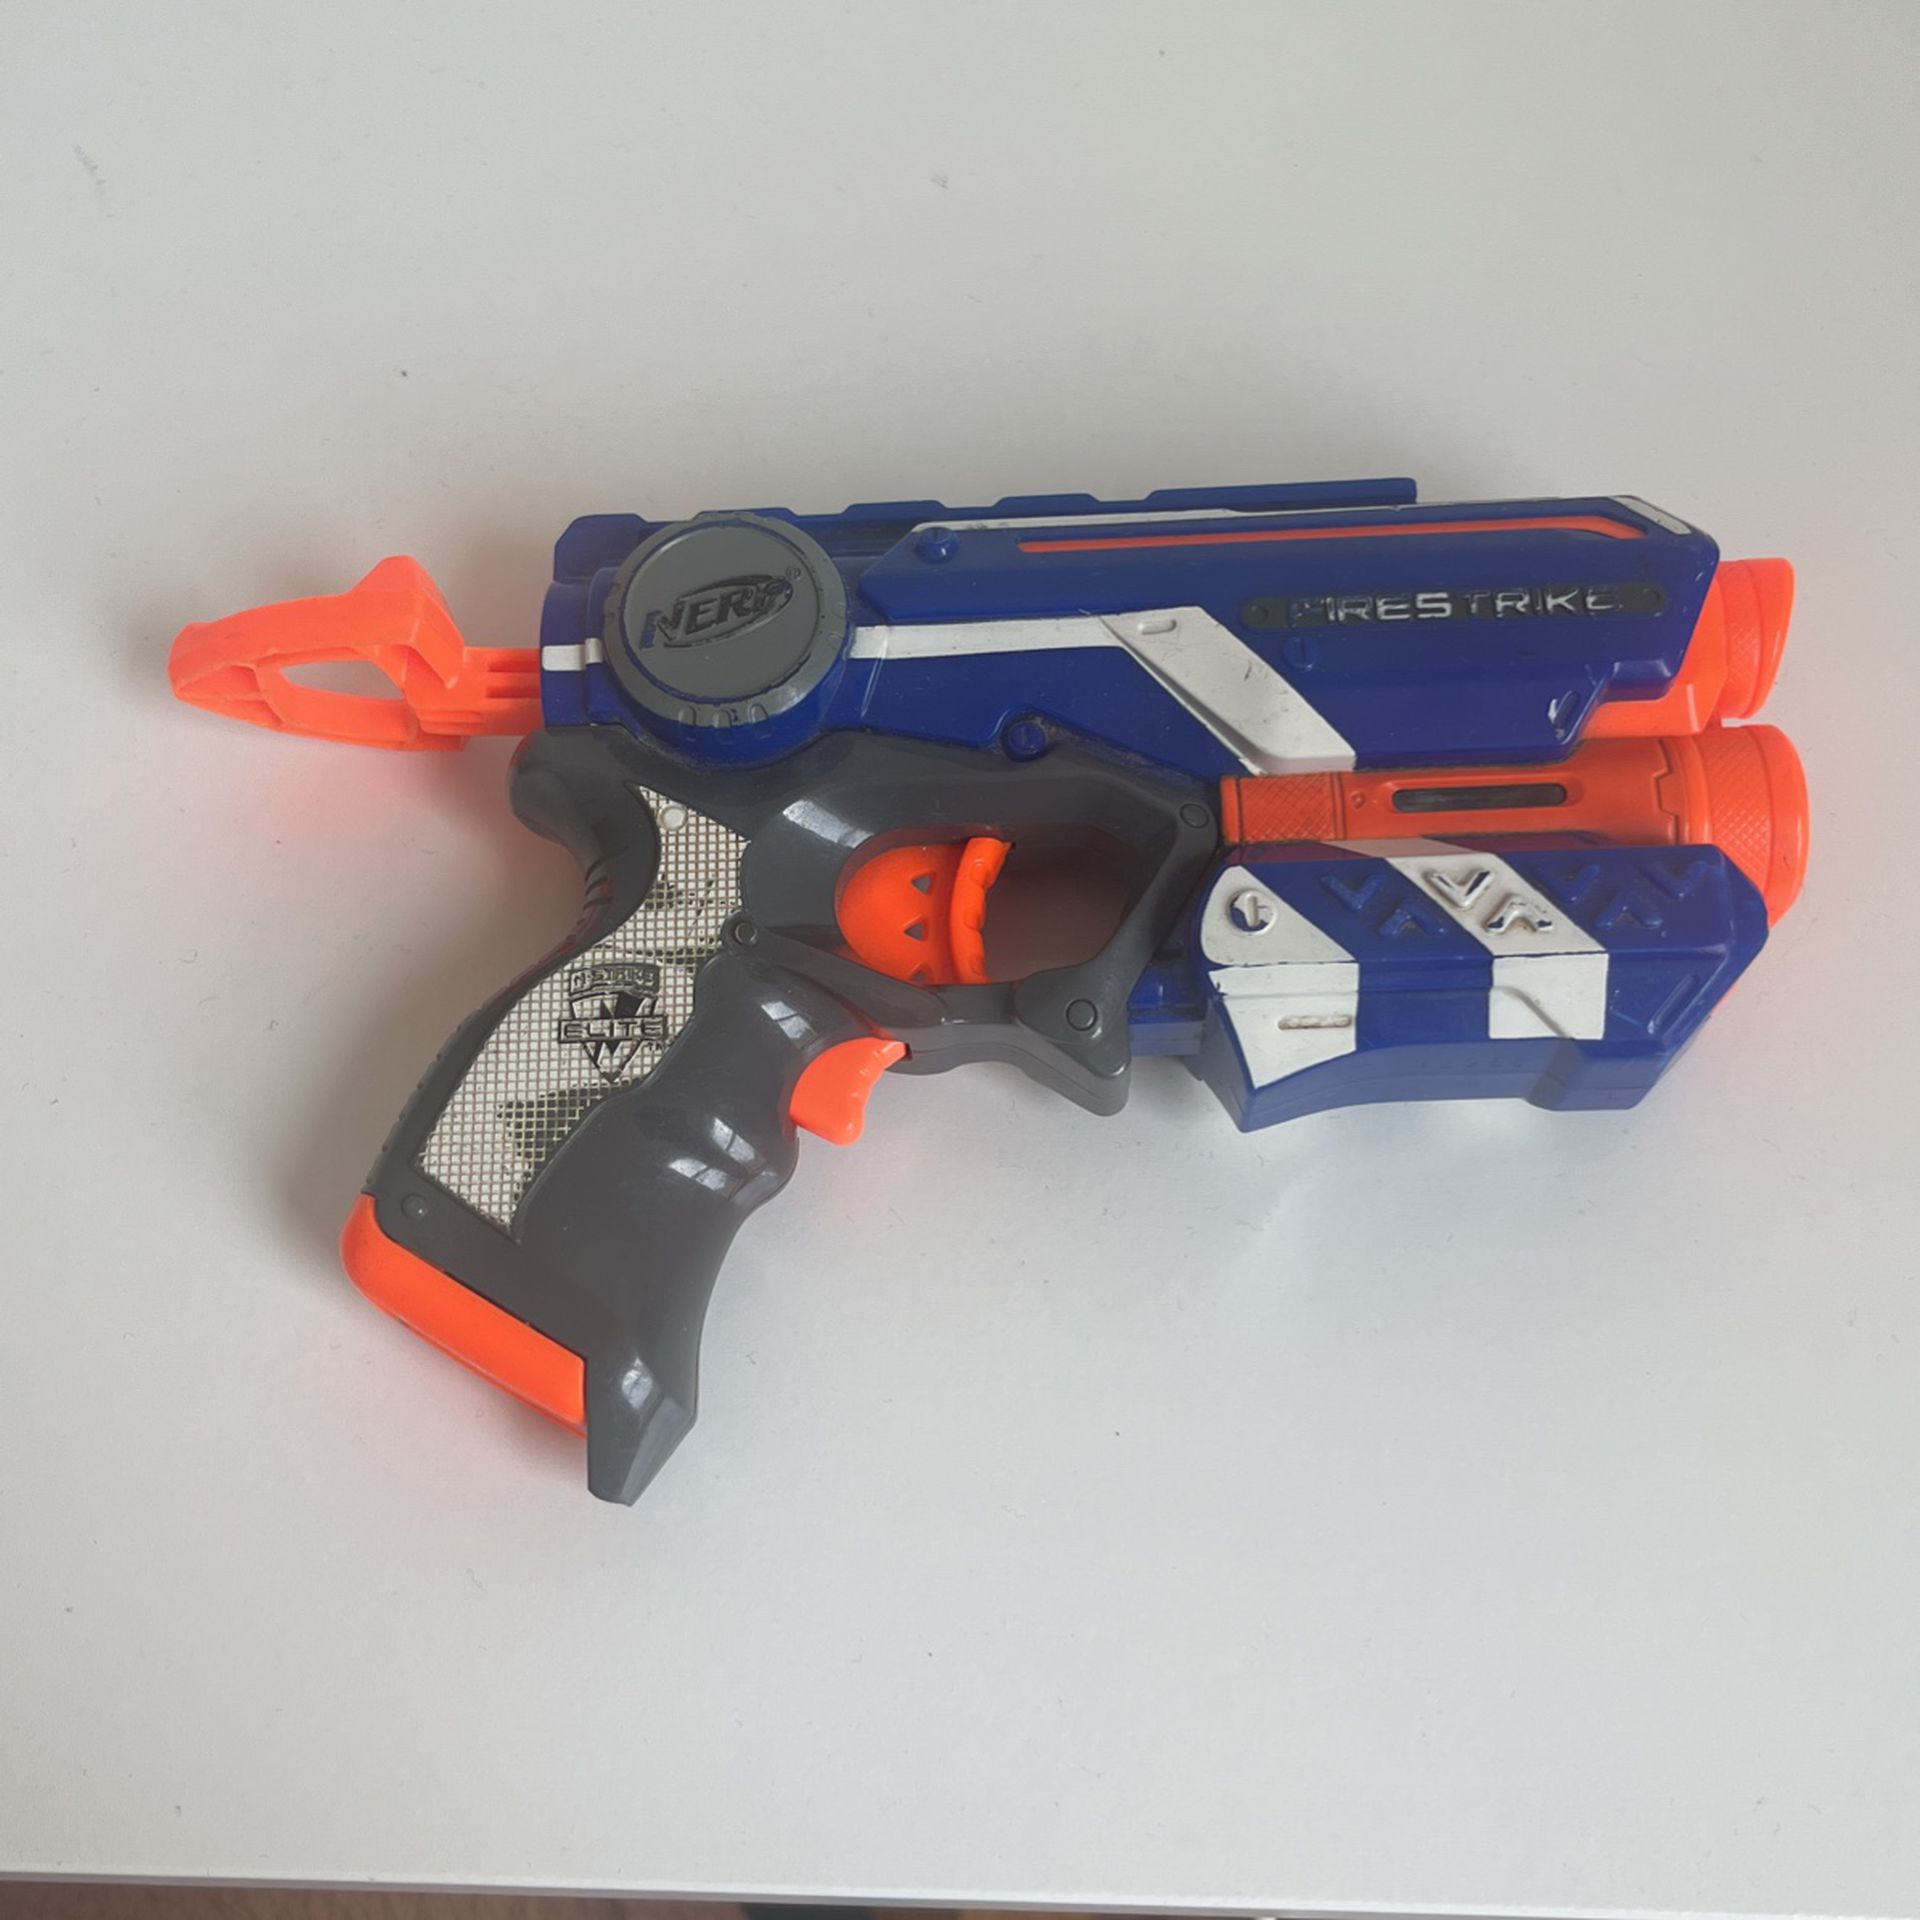 NERF Strike Elite Gun Blaster Toy for Sale in The Bronx, NY - OfferUp